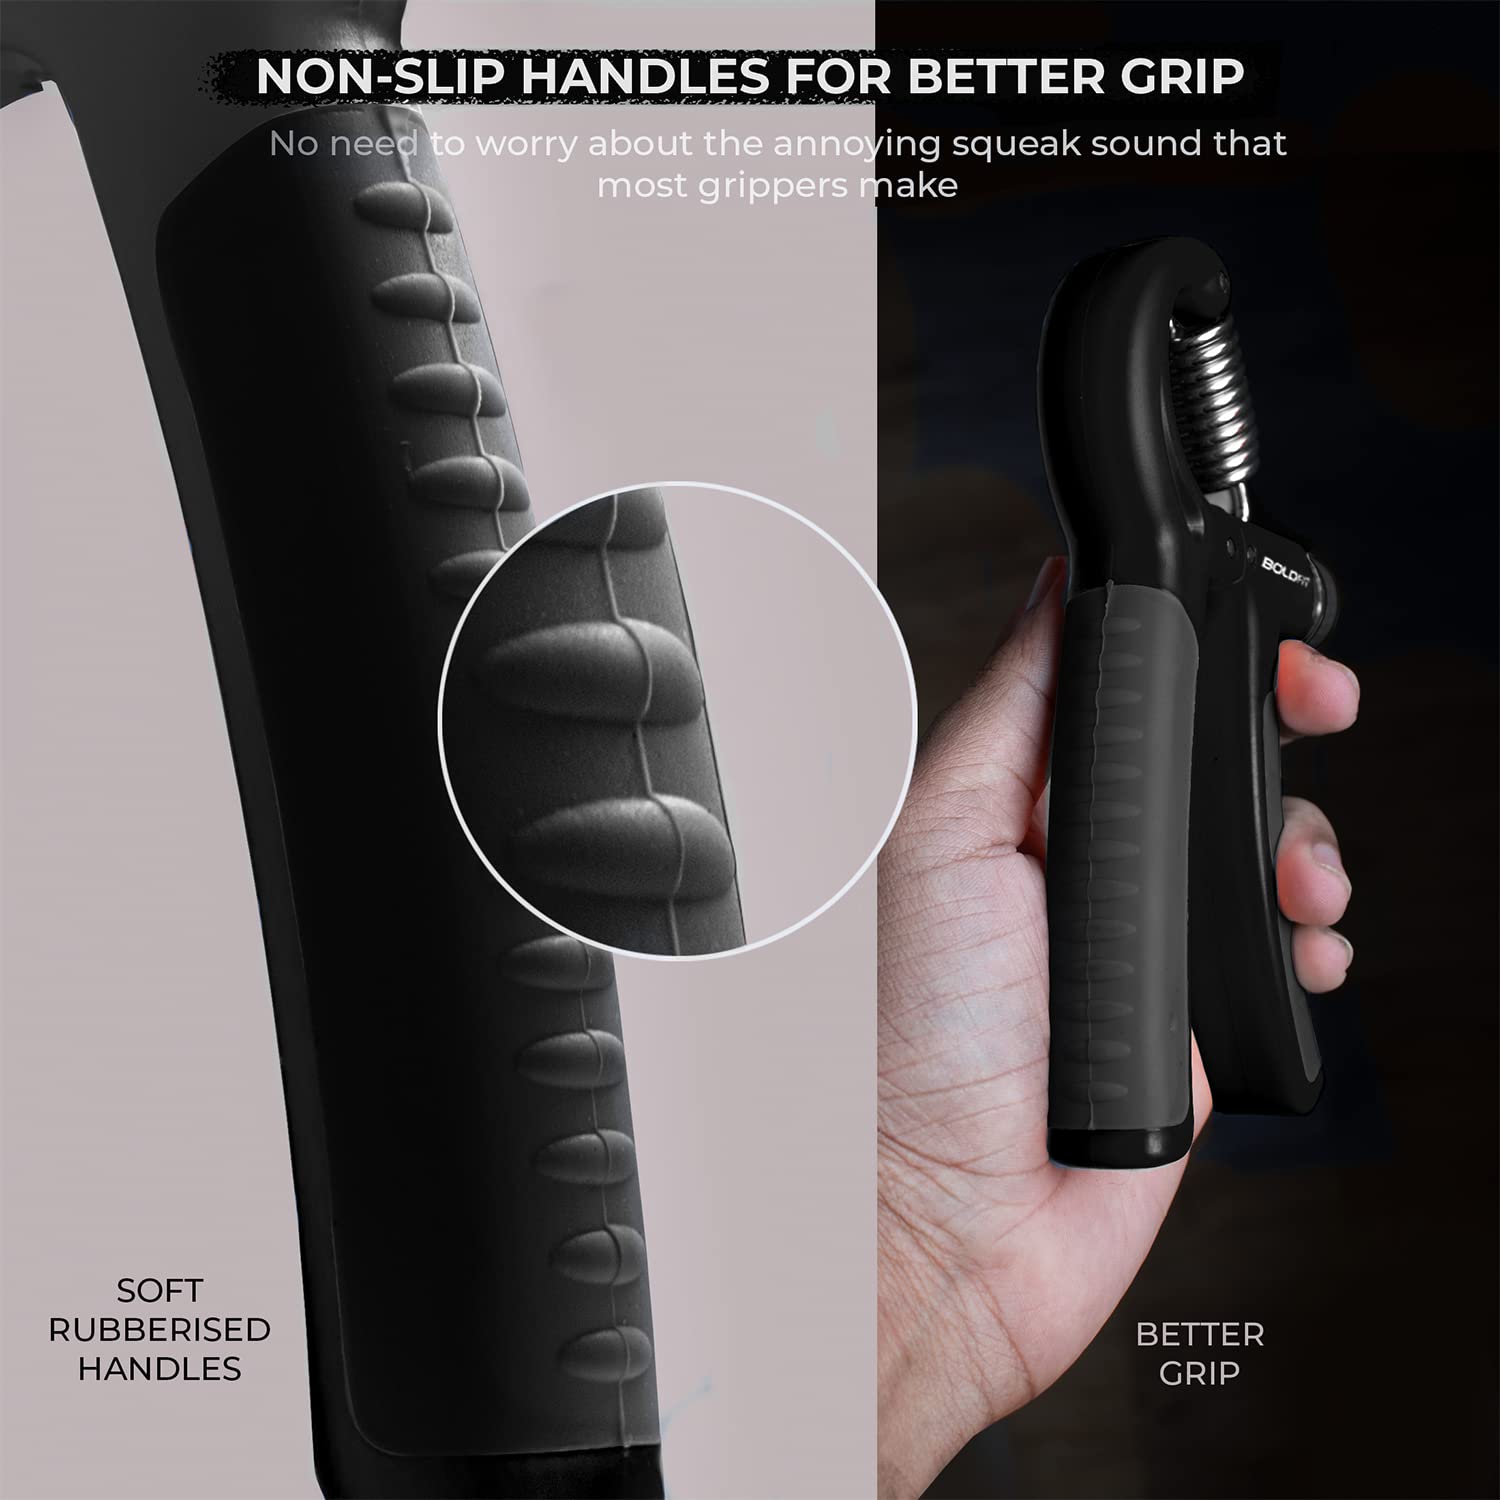 Boldfit Adjustable Hand Grip